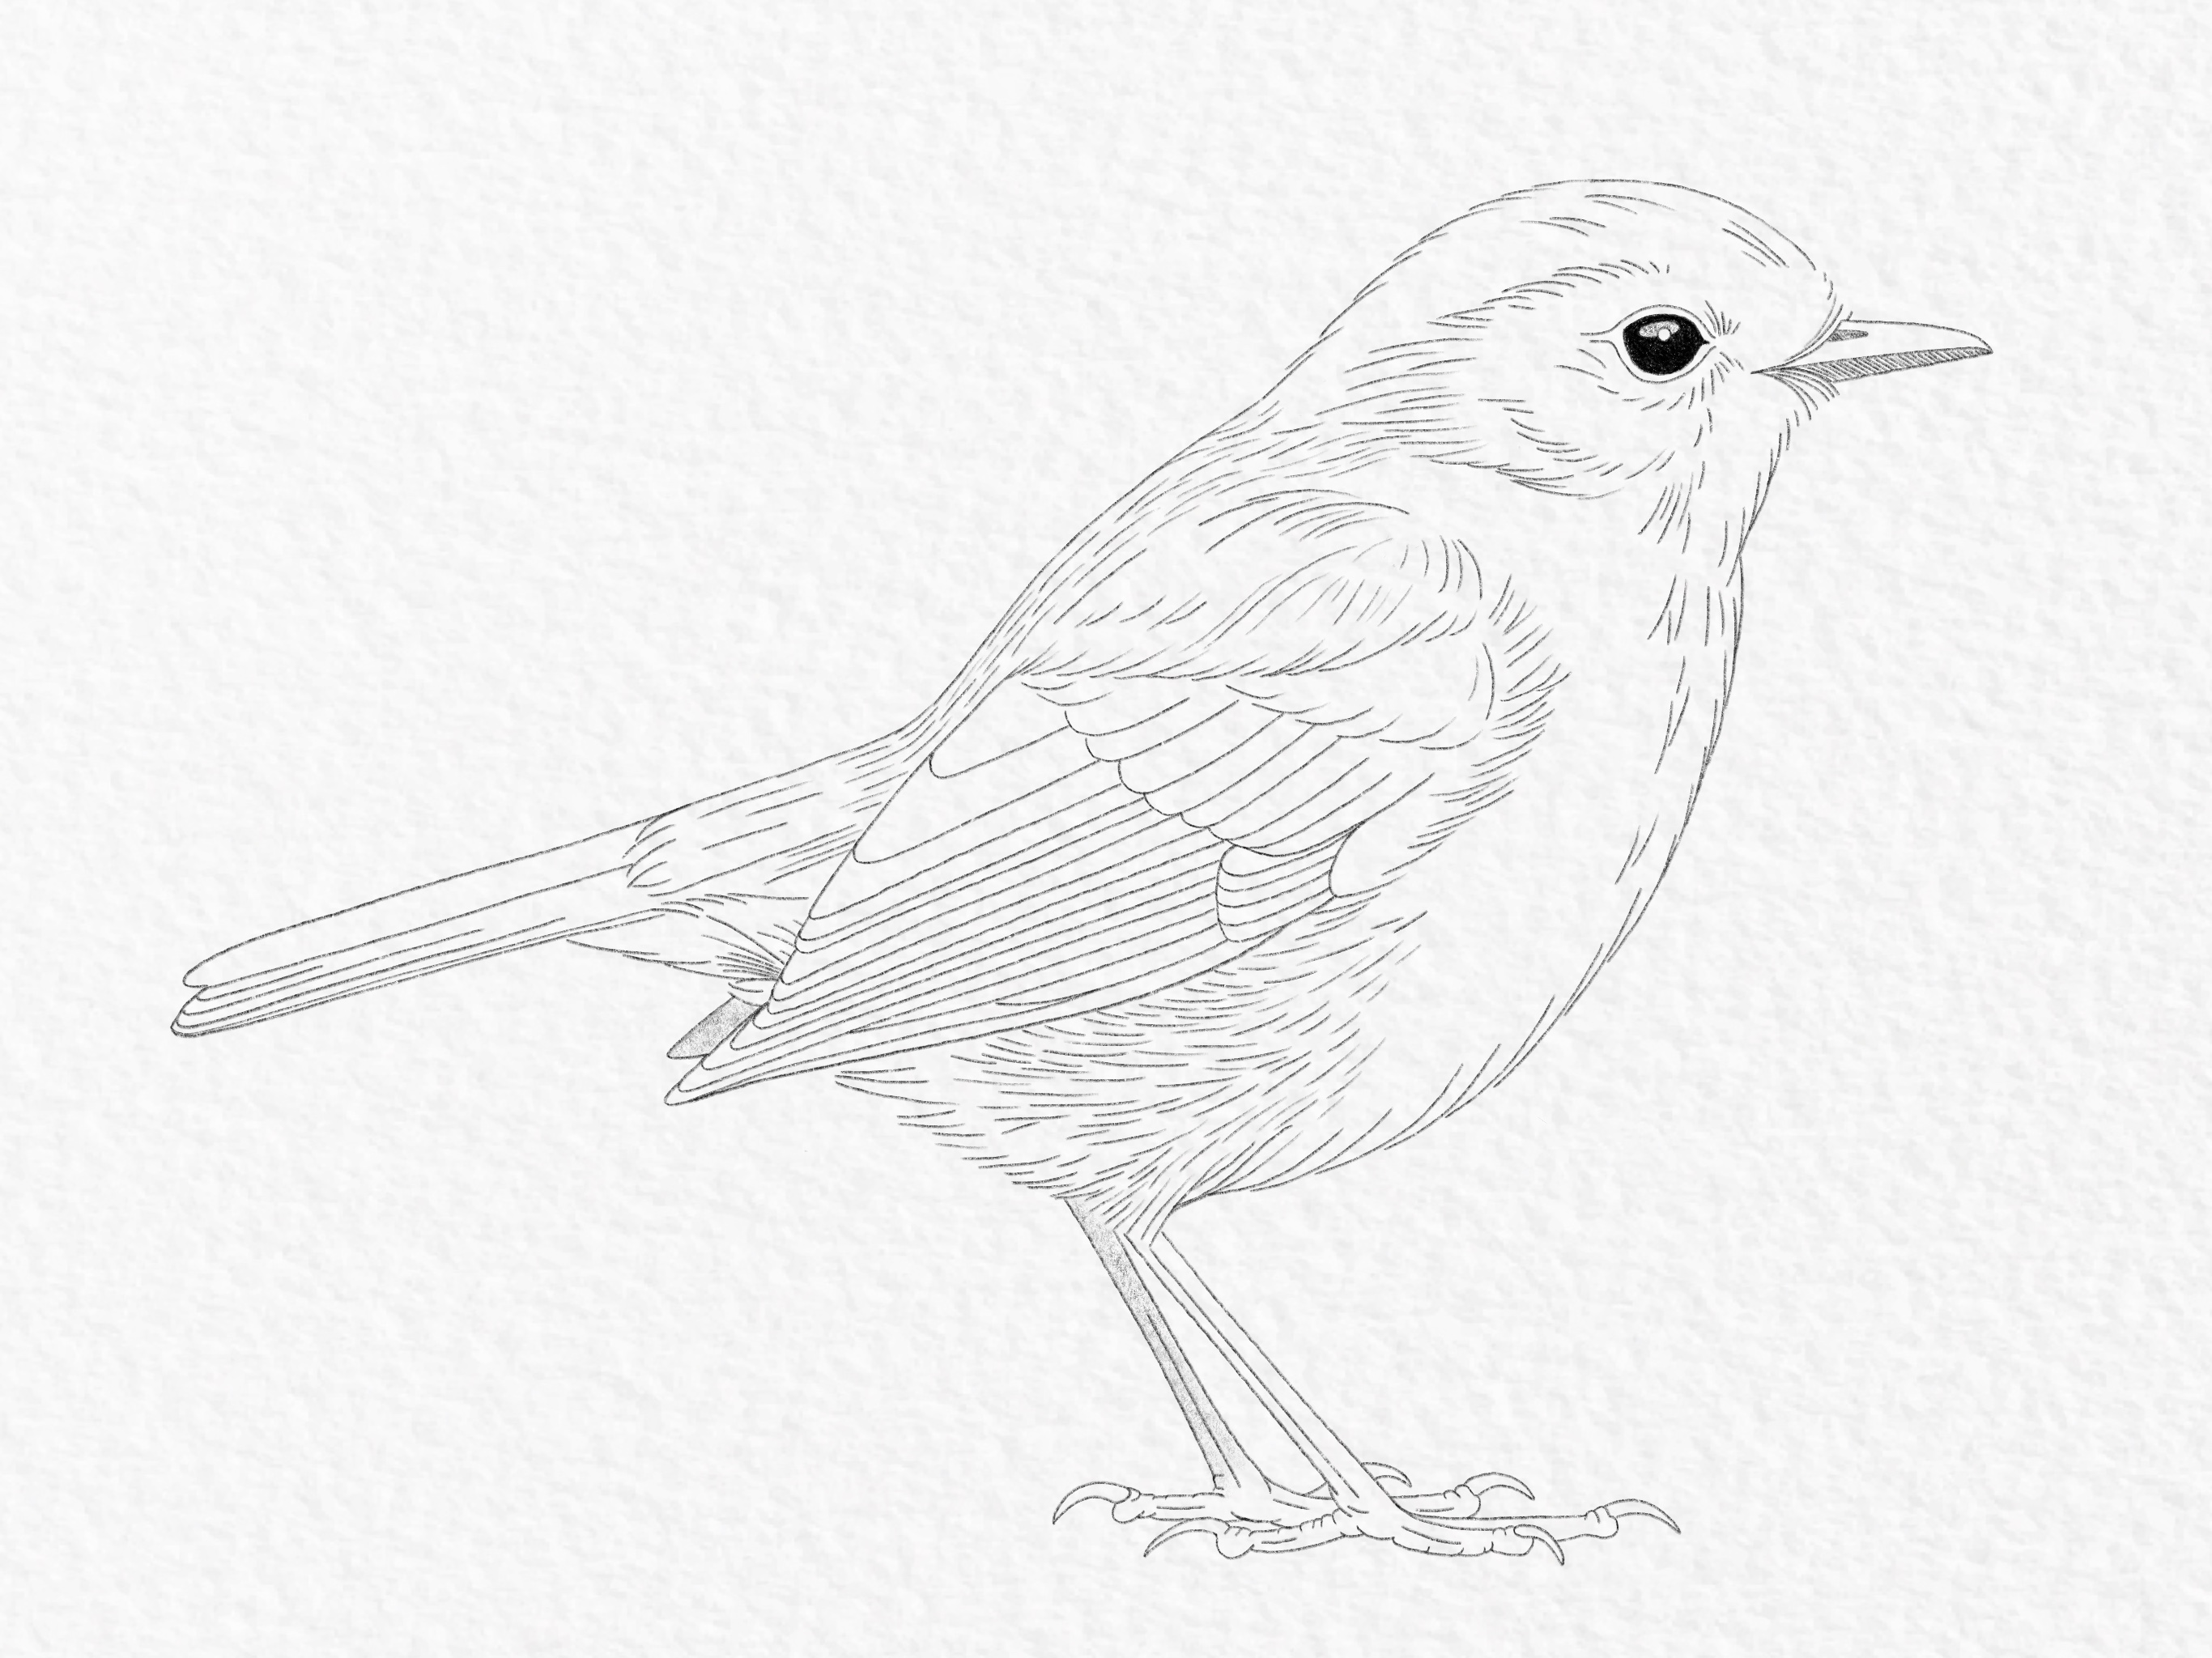 How to draw a bird Step 20 182cc41